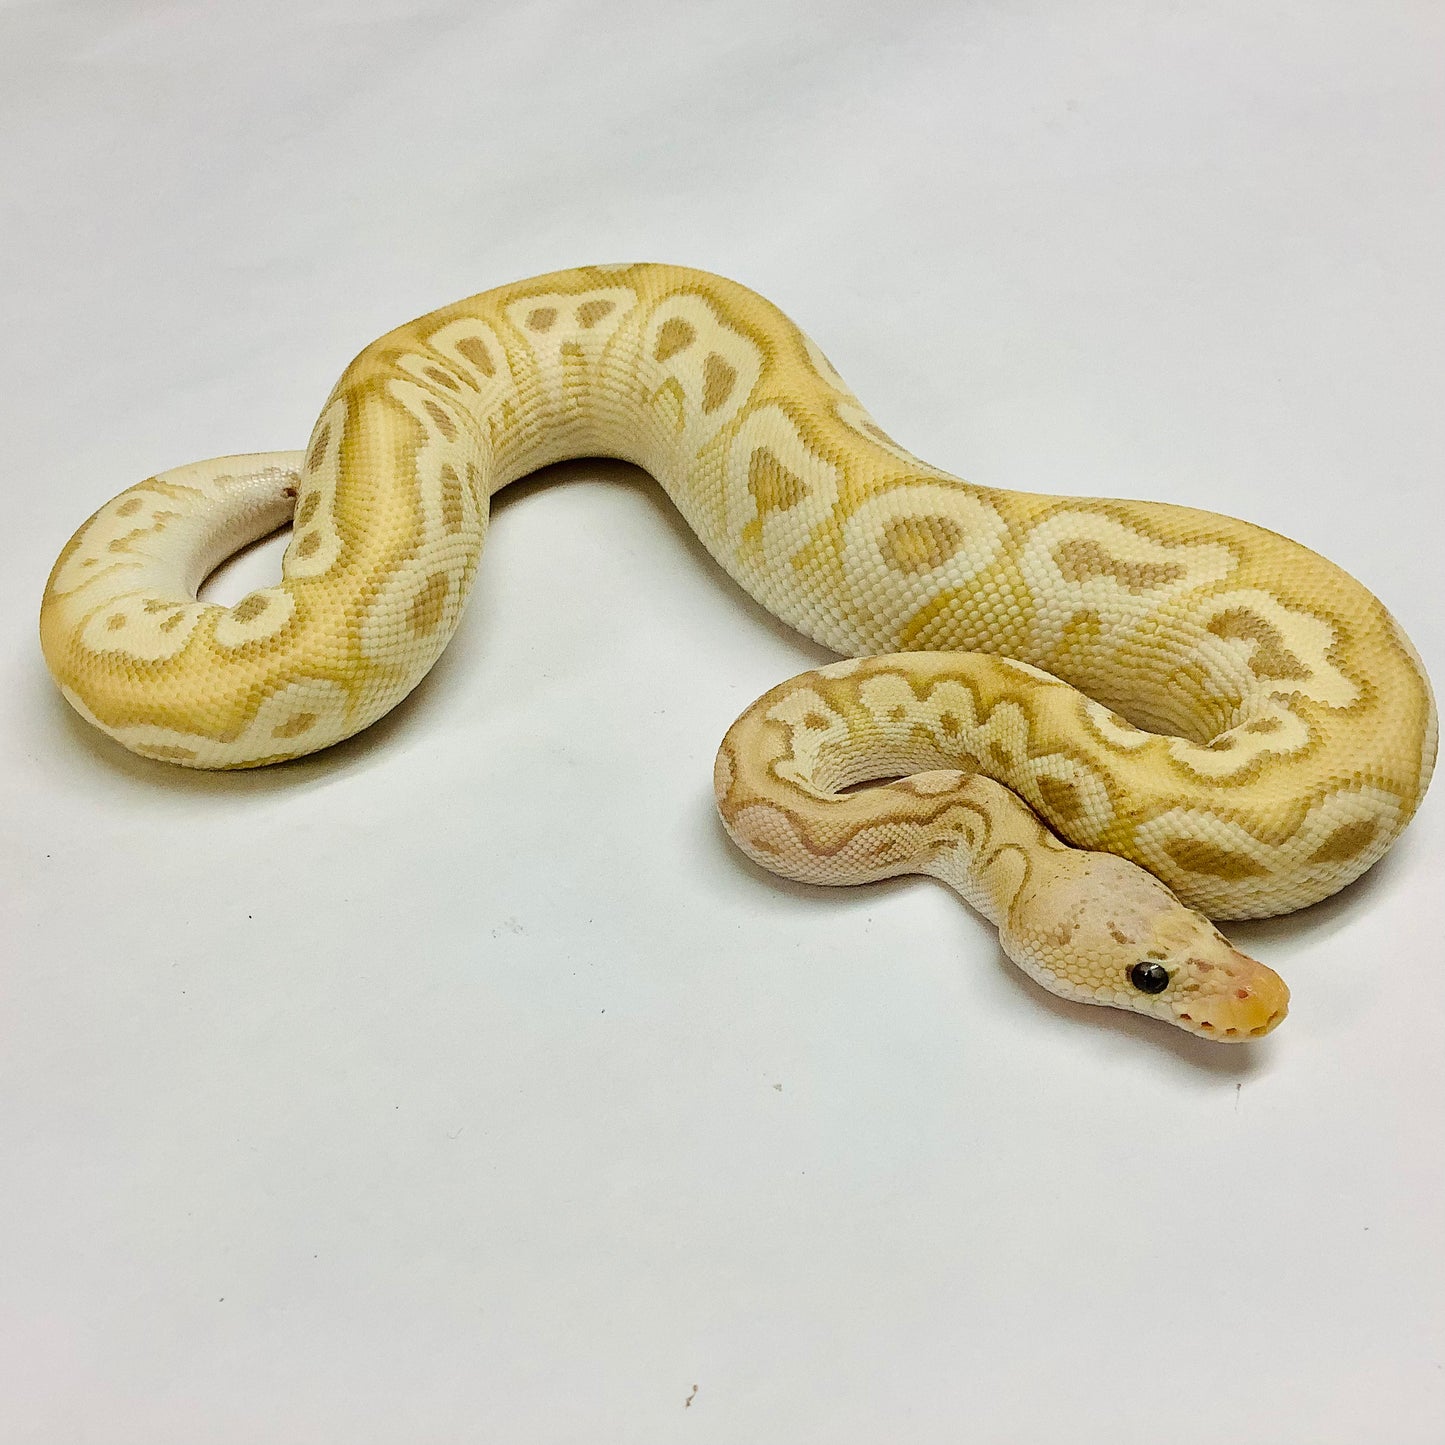 Pastave Banana Clown Ball Python - Male #2021M01